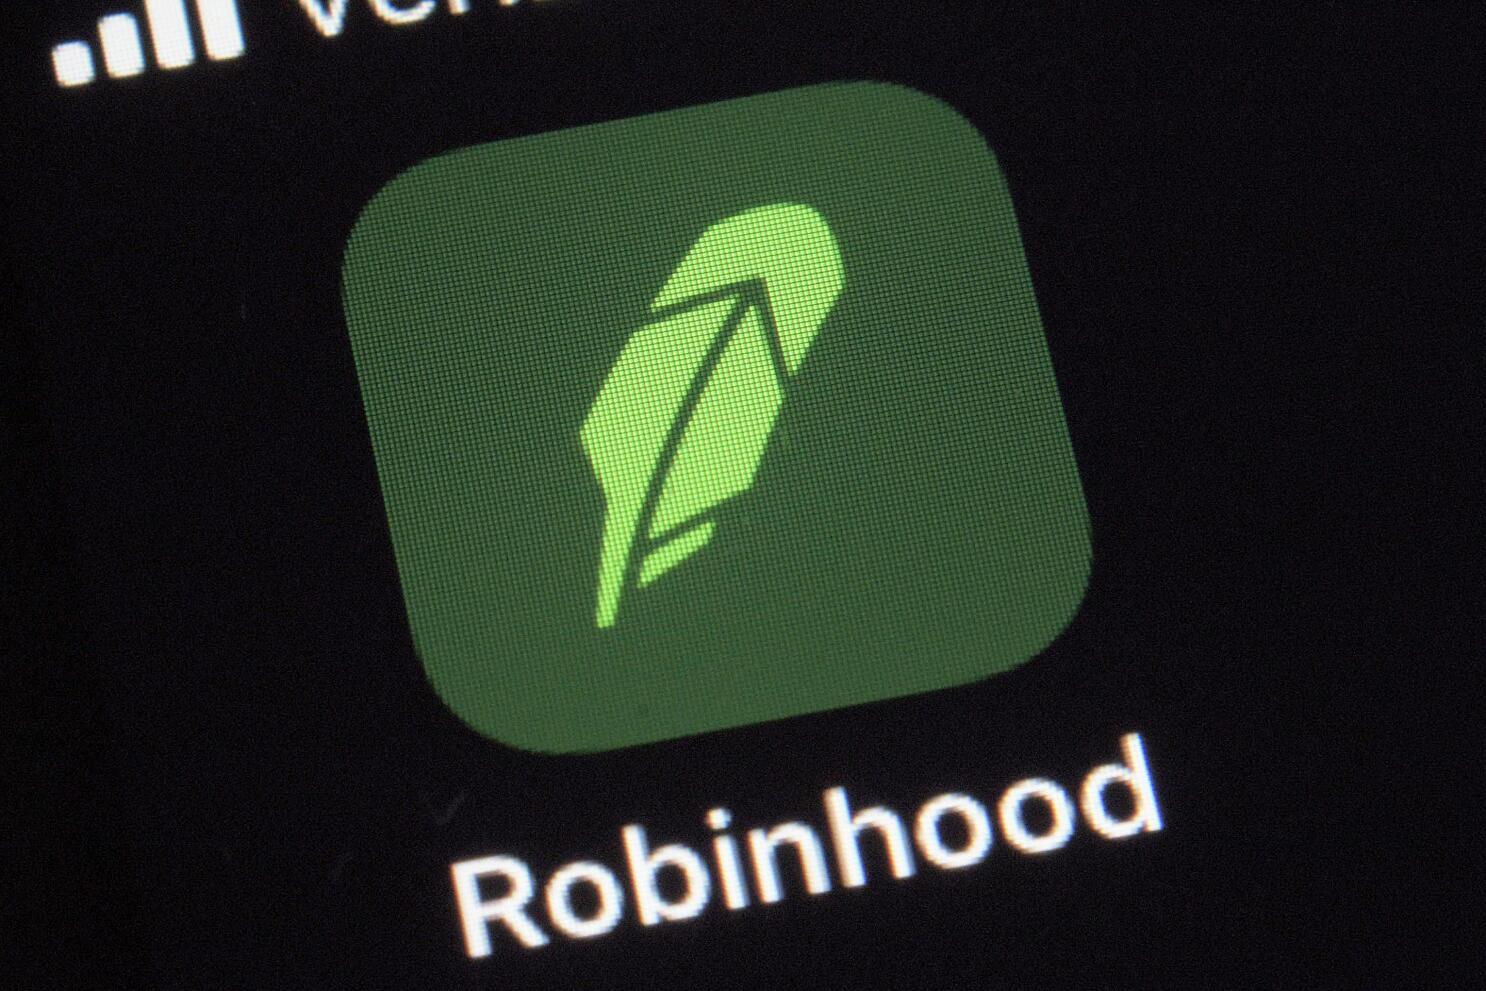 Robinhood, Citadel partnership likely to draw scrutiny after